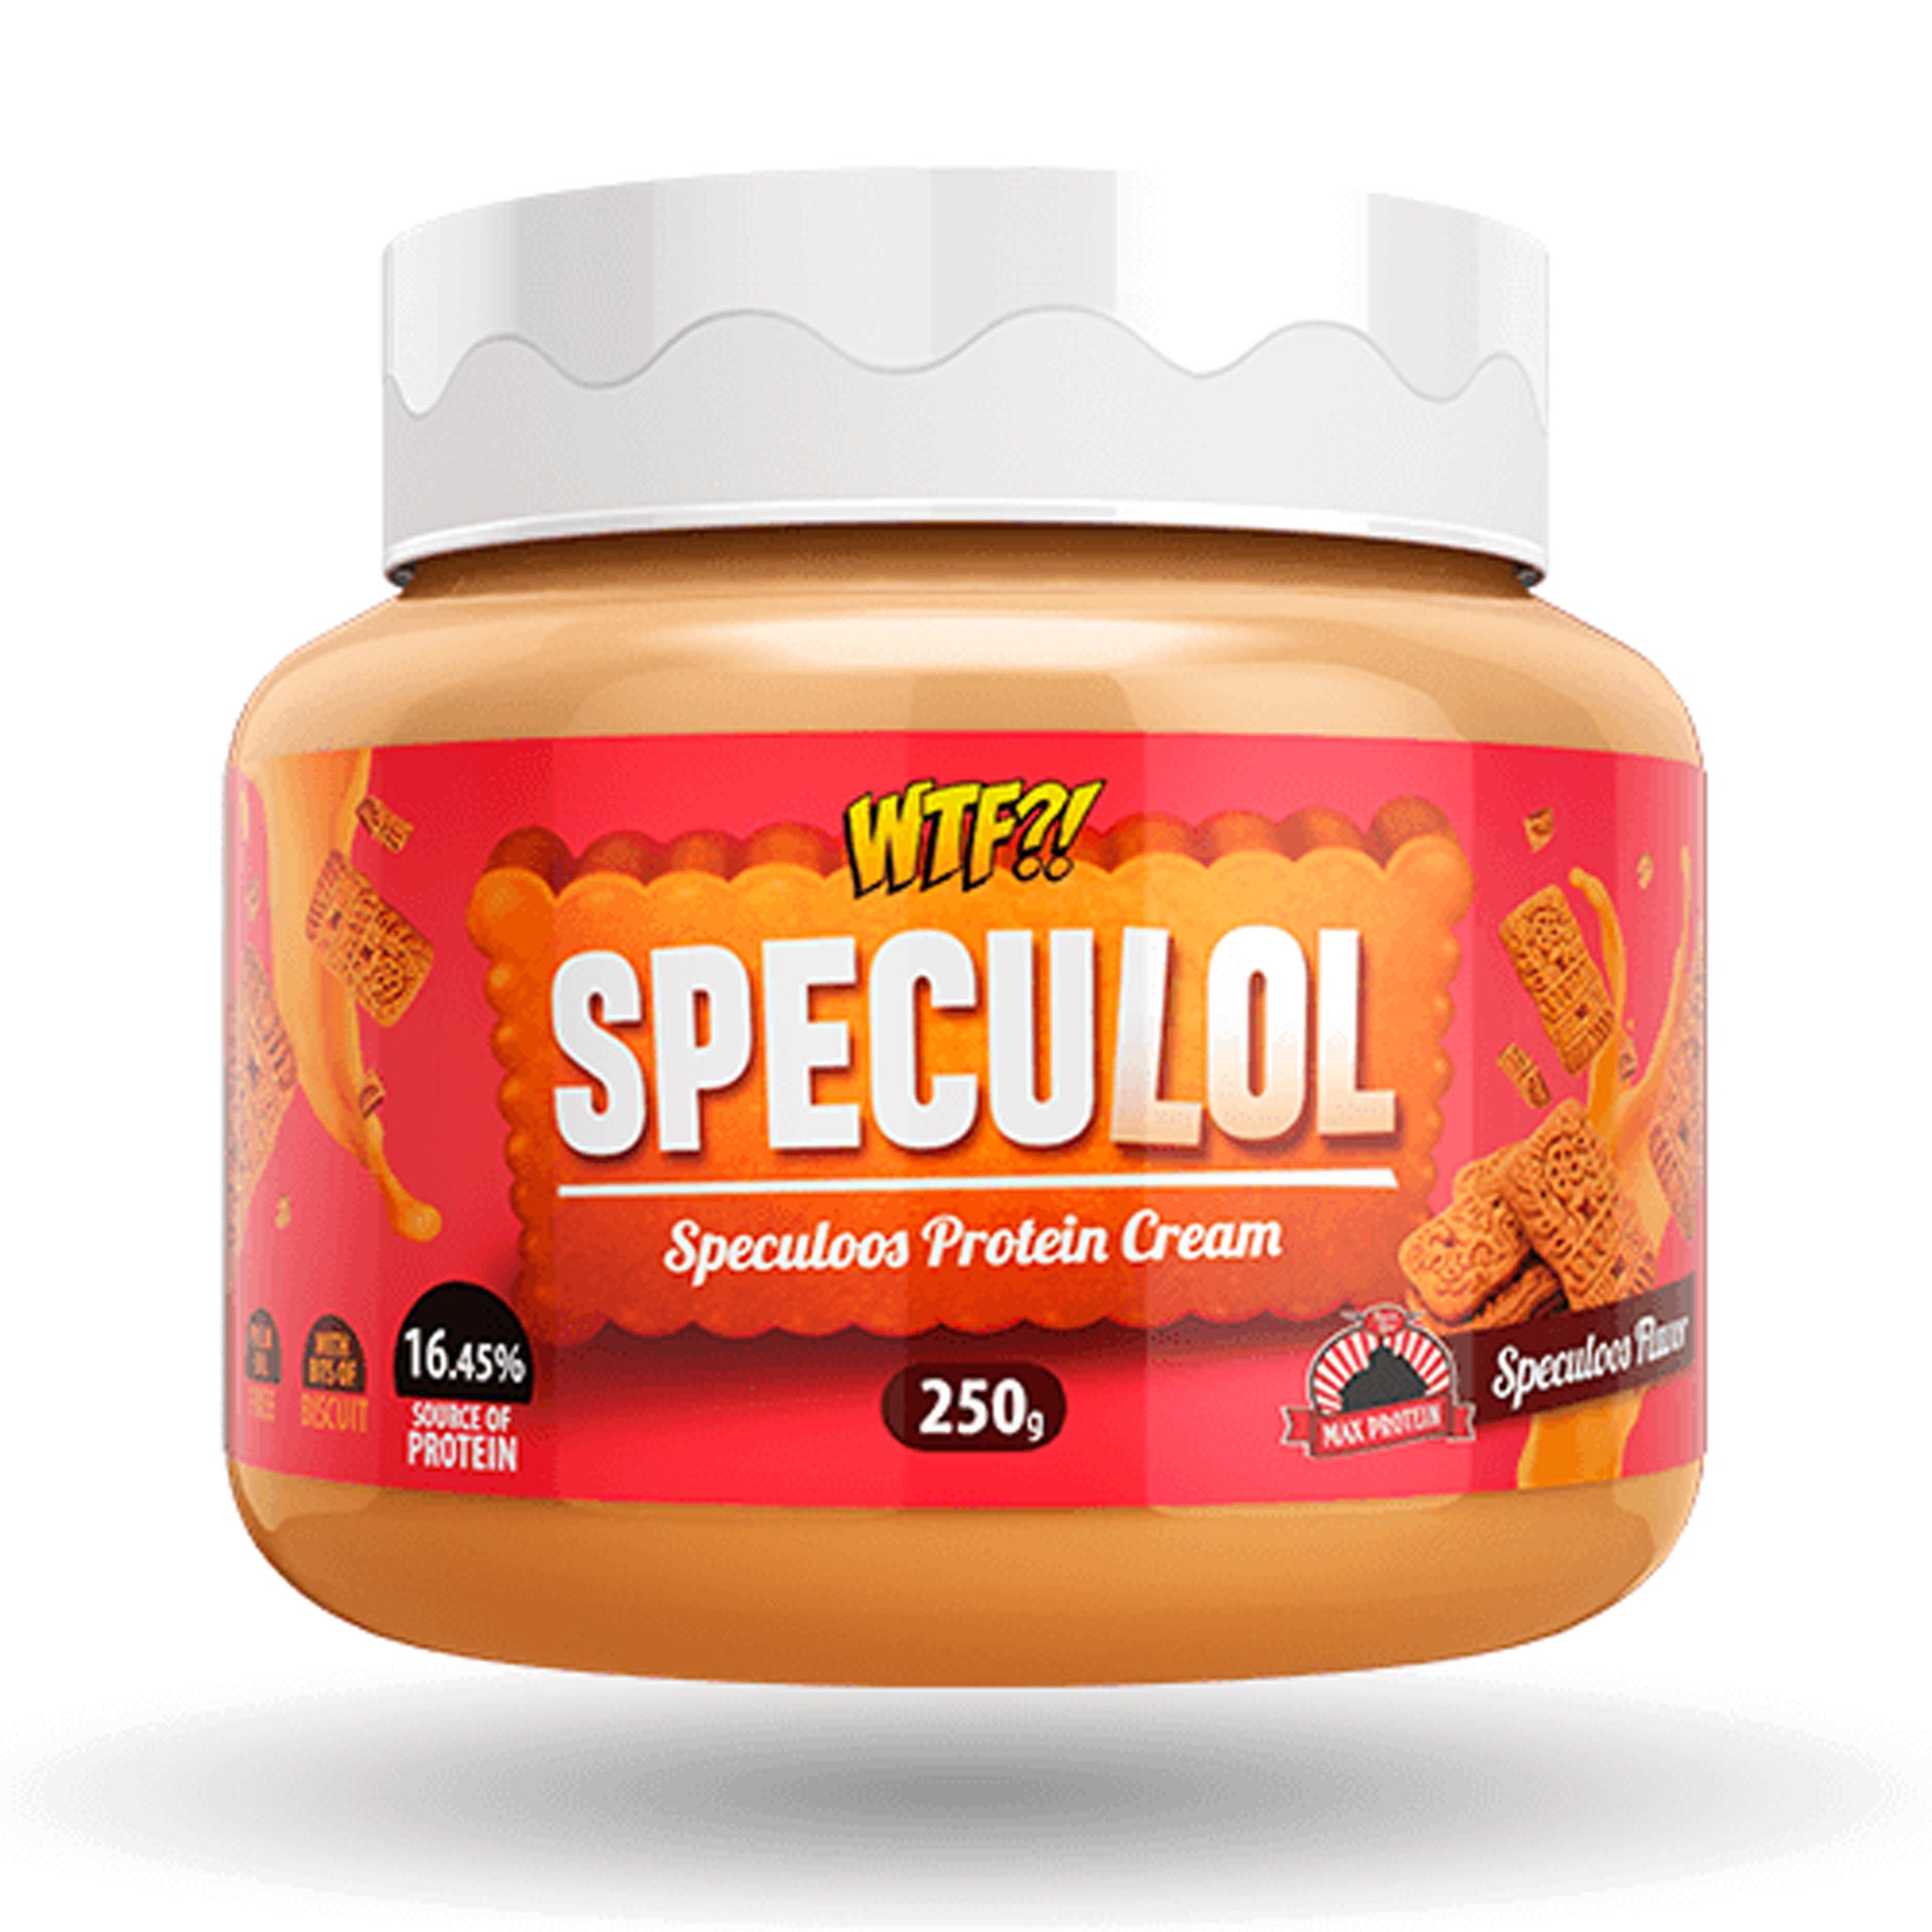 Protein Cream Speculol (250g)